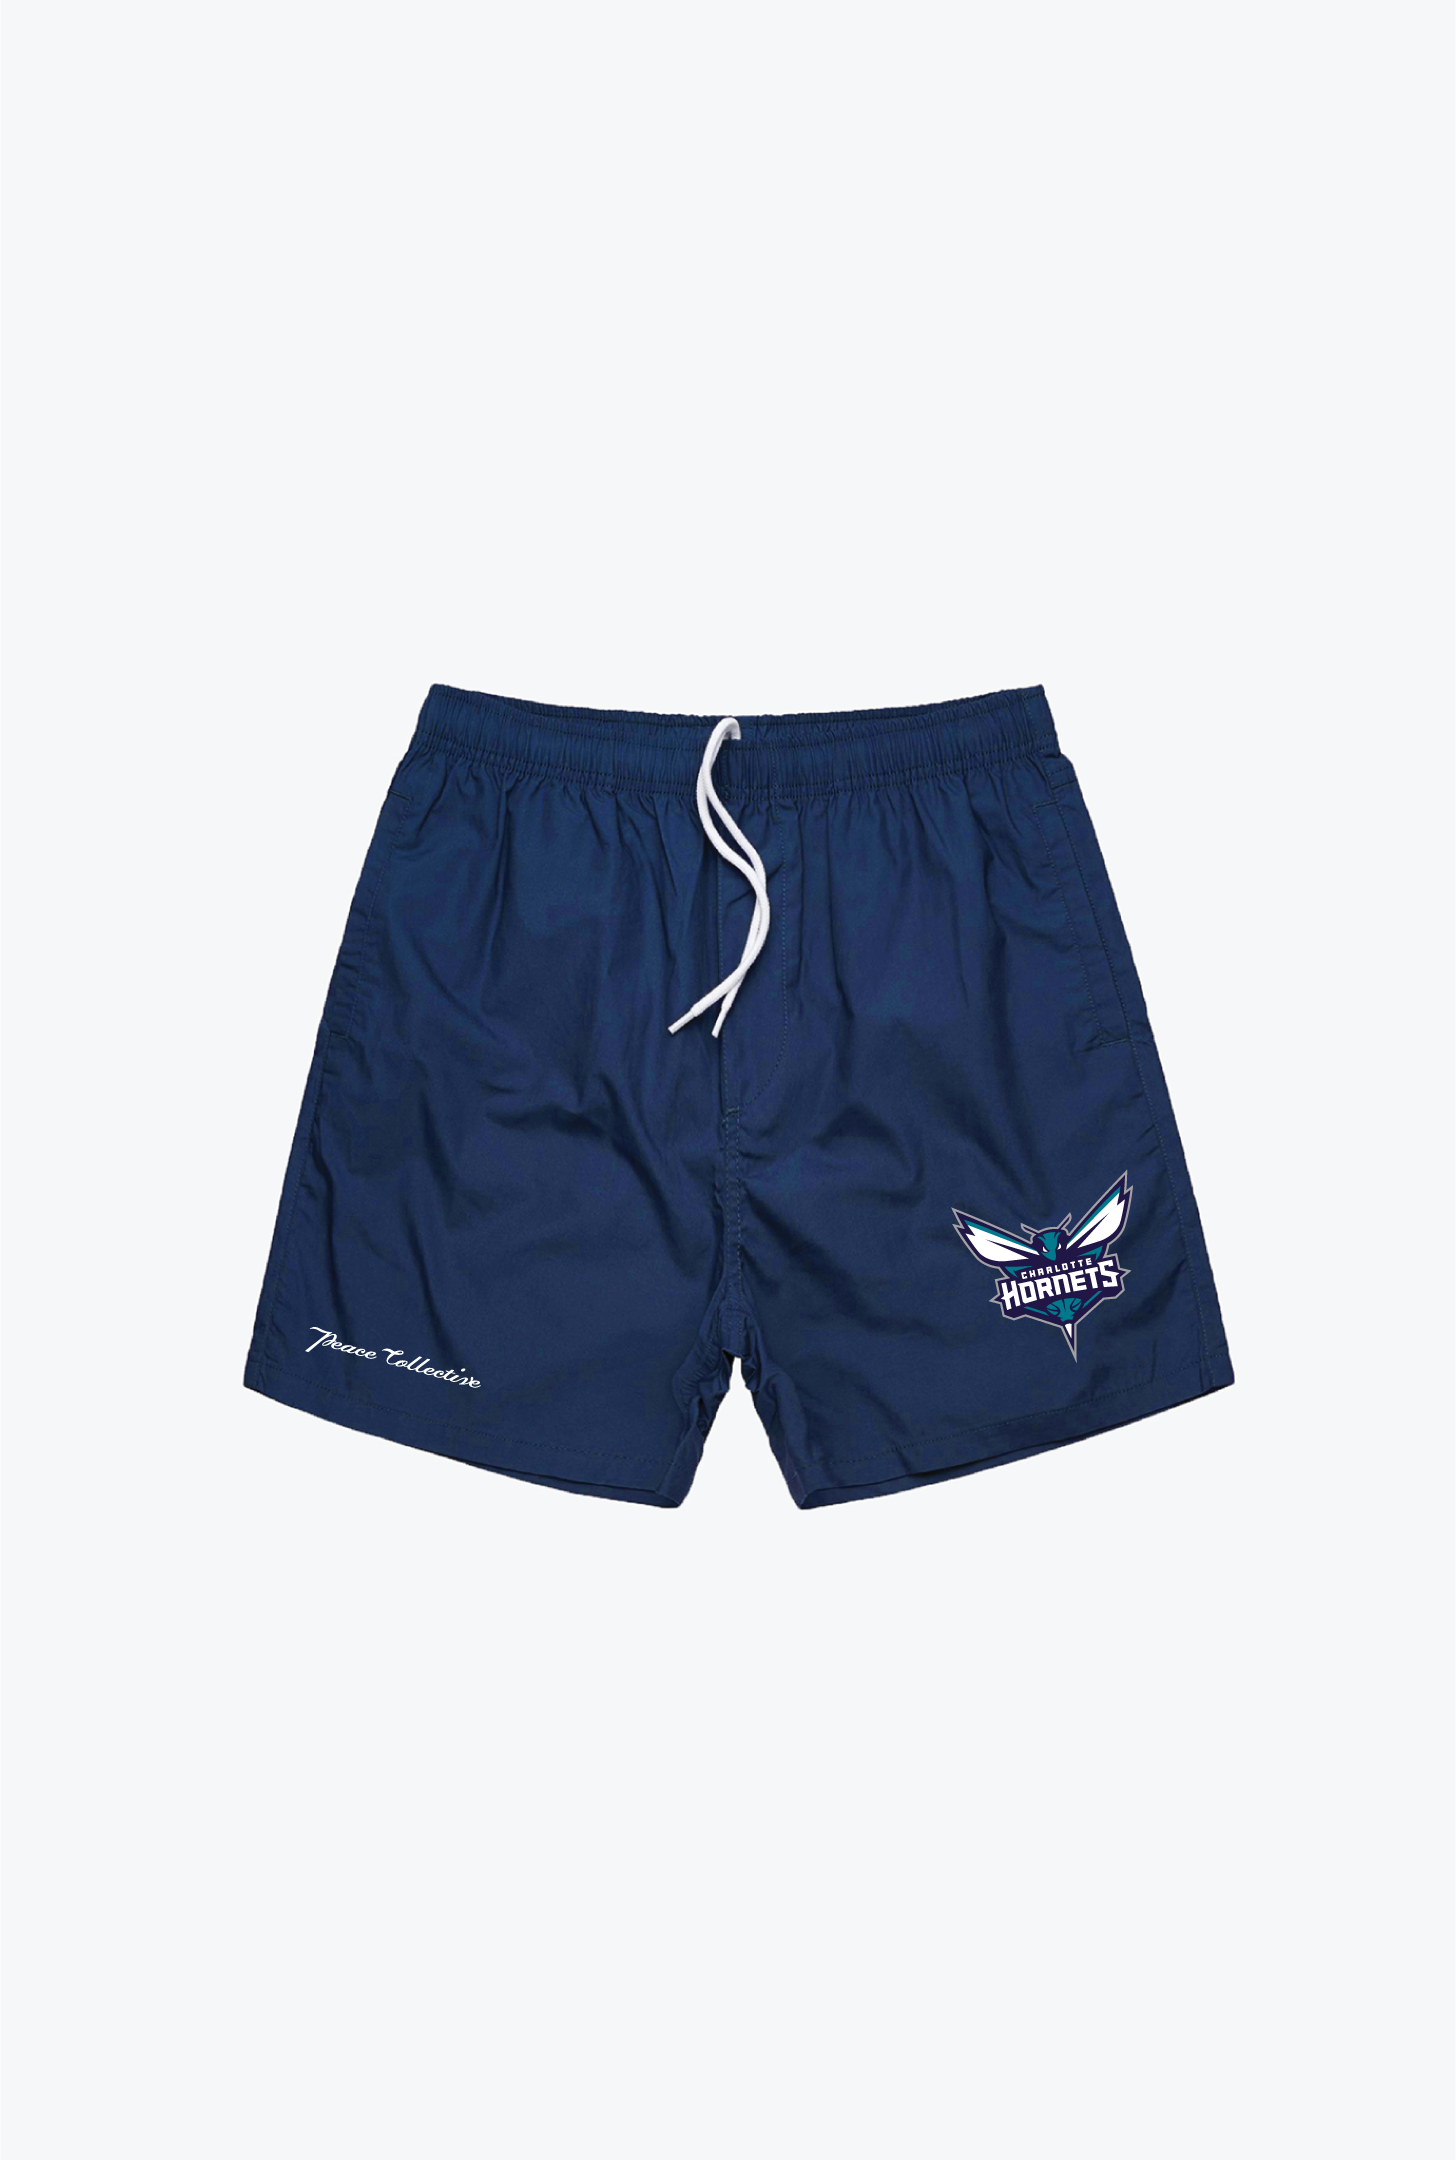 Charlotte Hornets Board Shorts - Navy